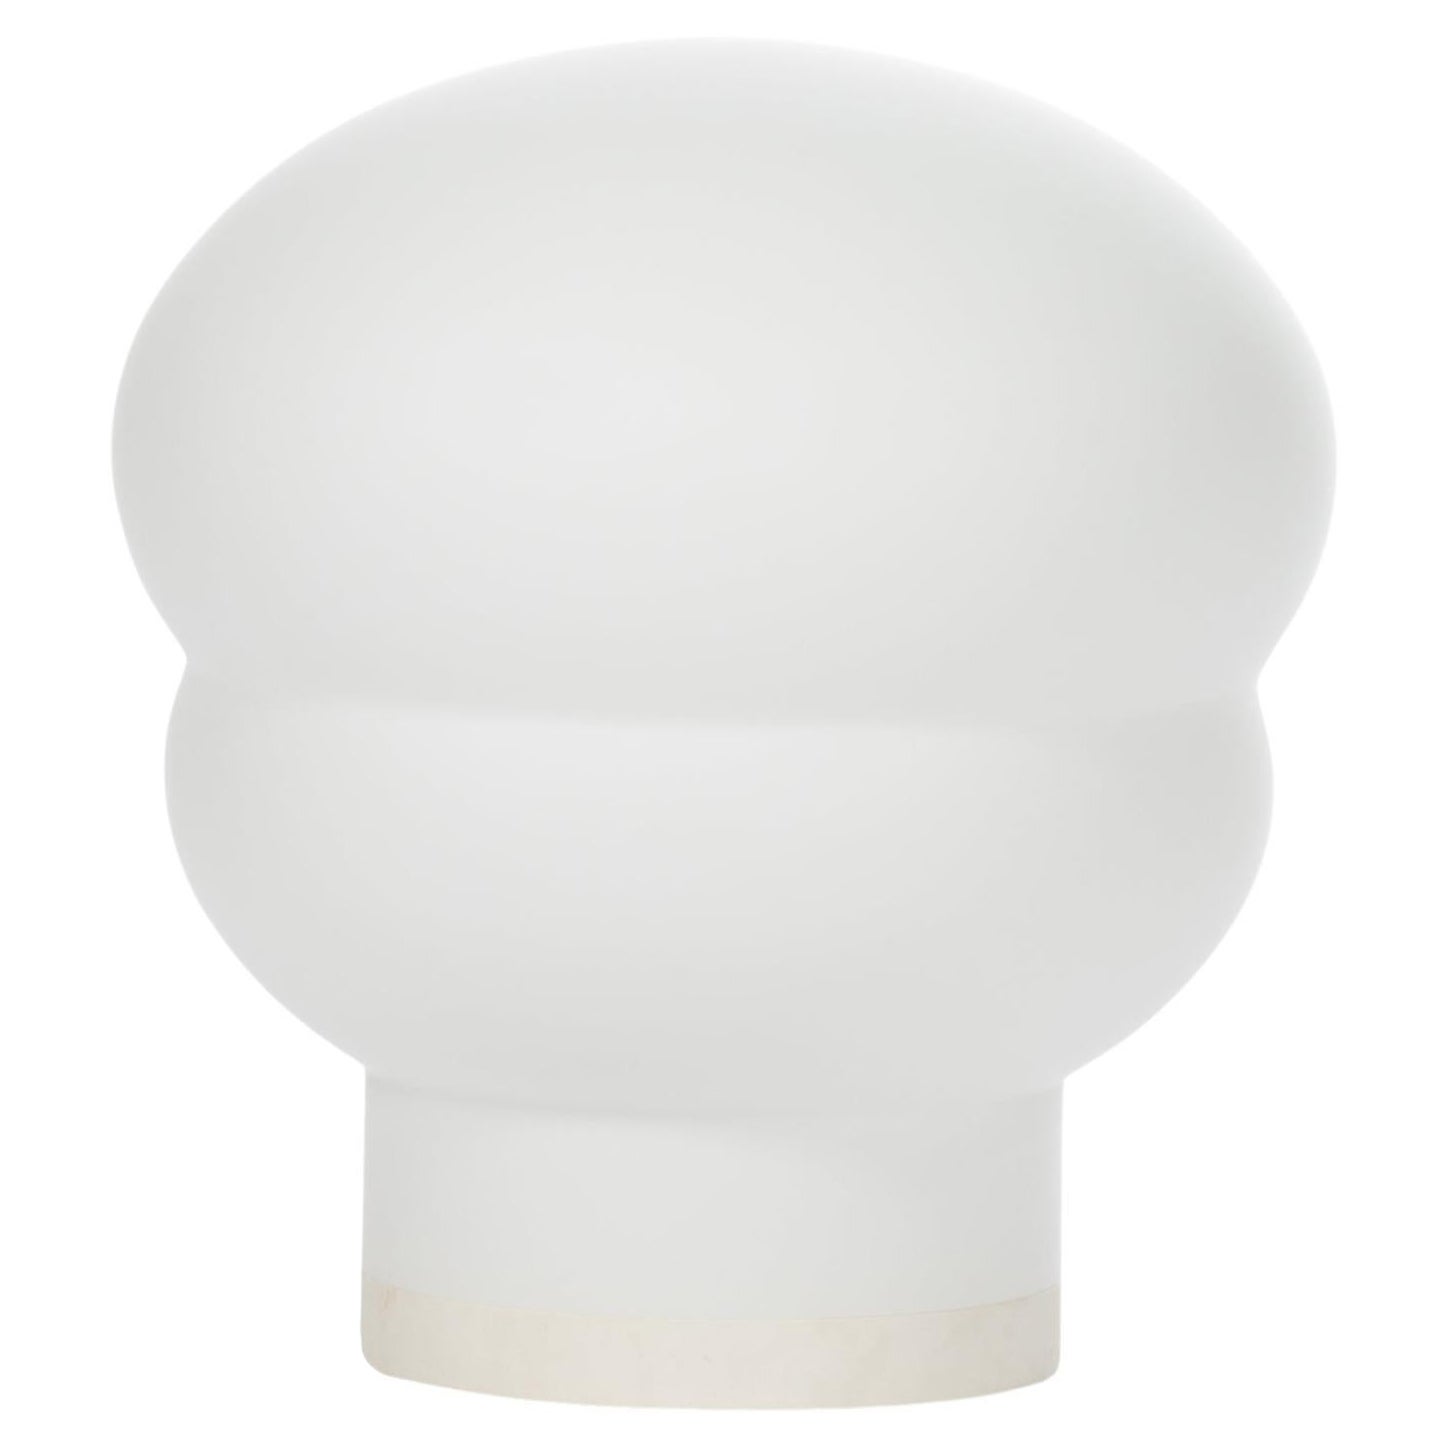 Kumo Medium White Acetato White Floor Lamp by Pulpo For Sale